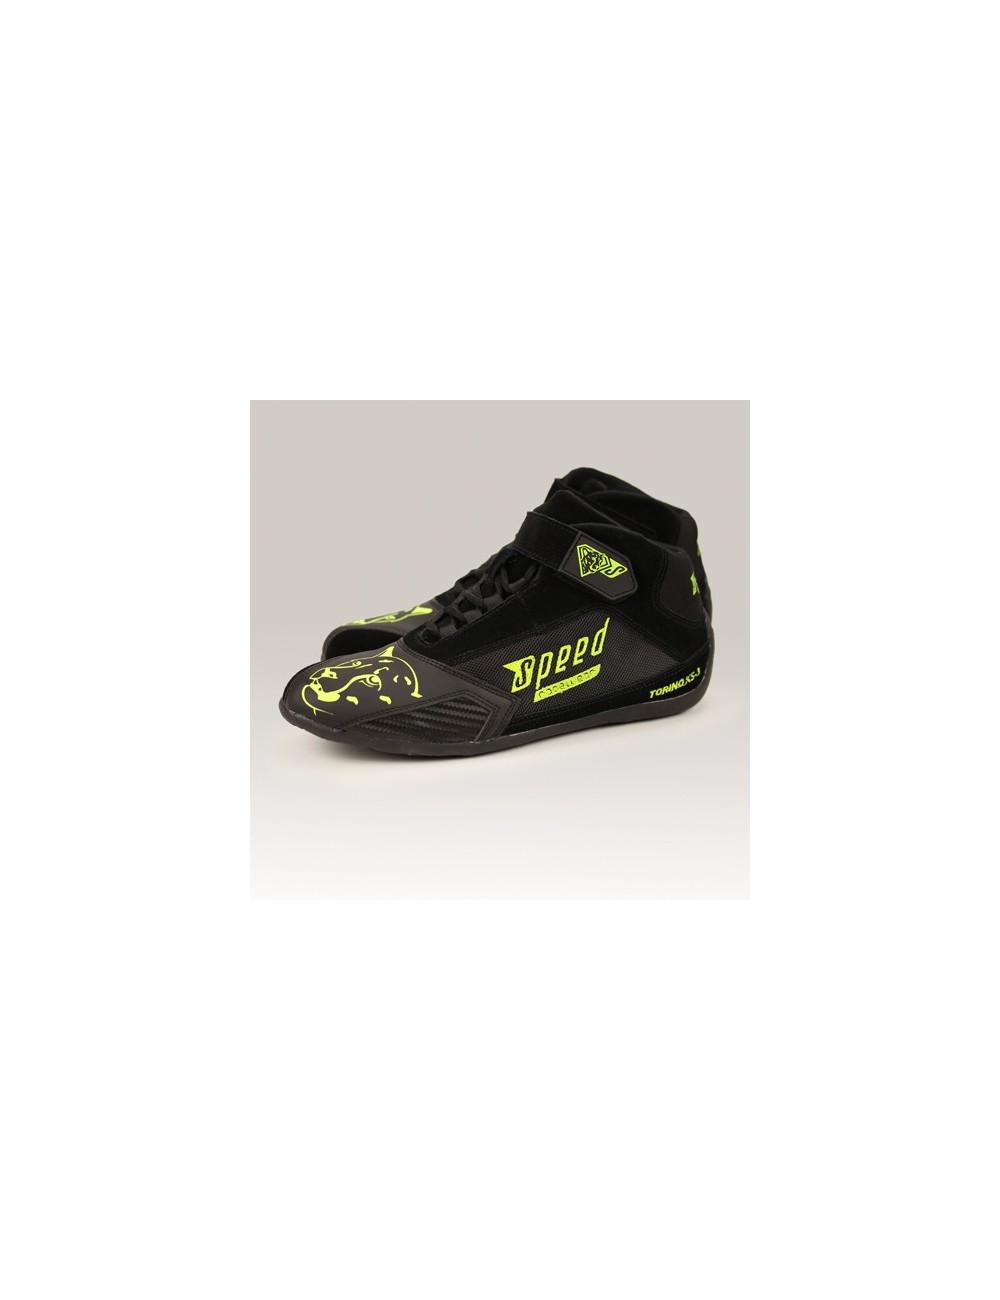 SPEED sapatos Torino KS-3 preto / neon-amarelo tamanho